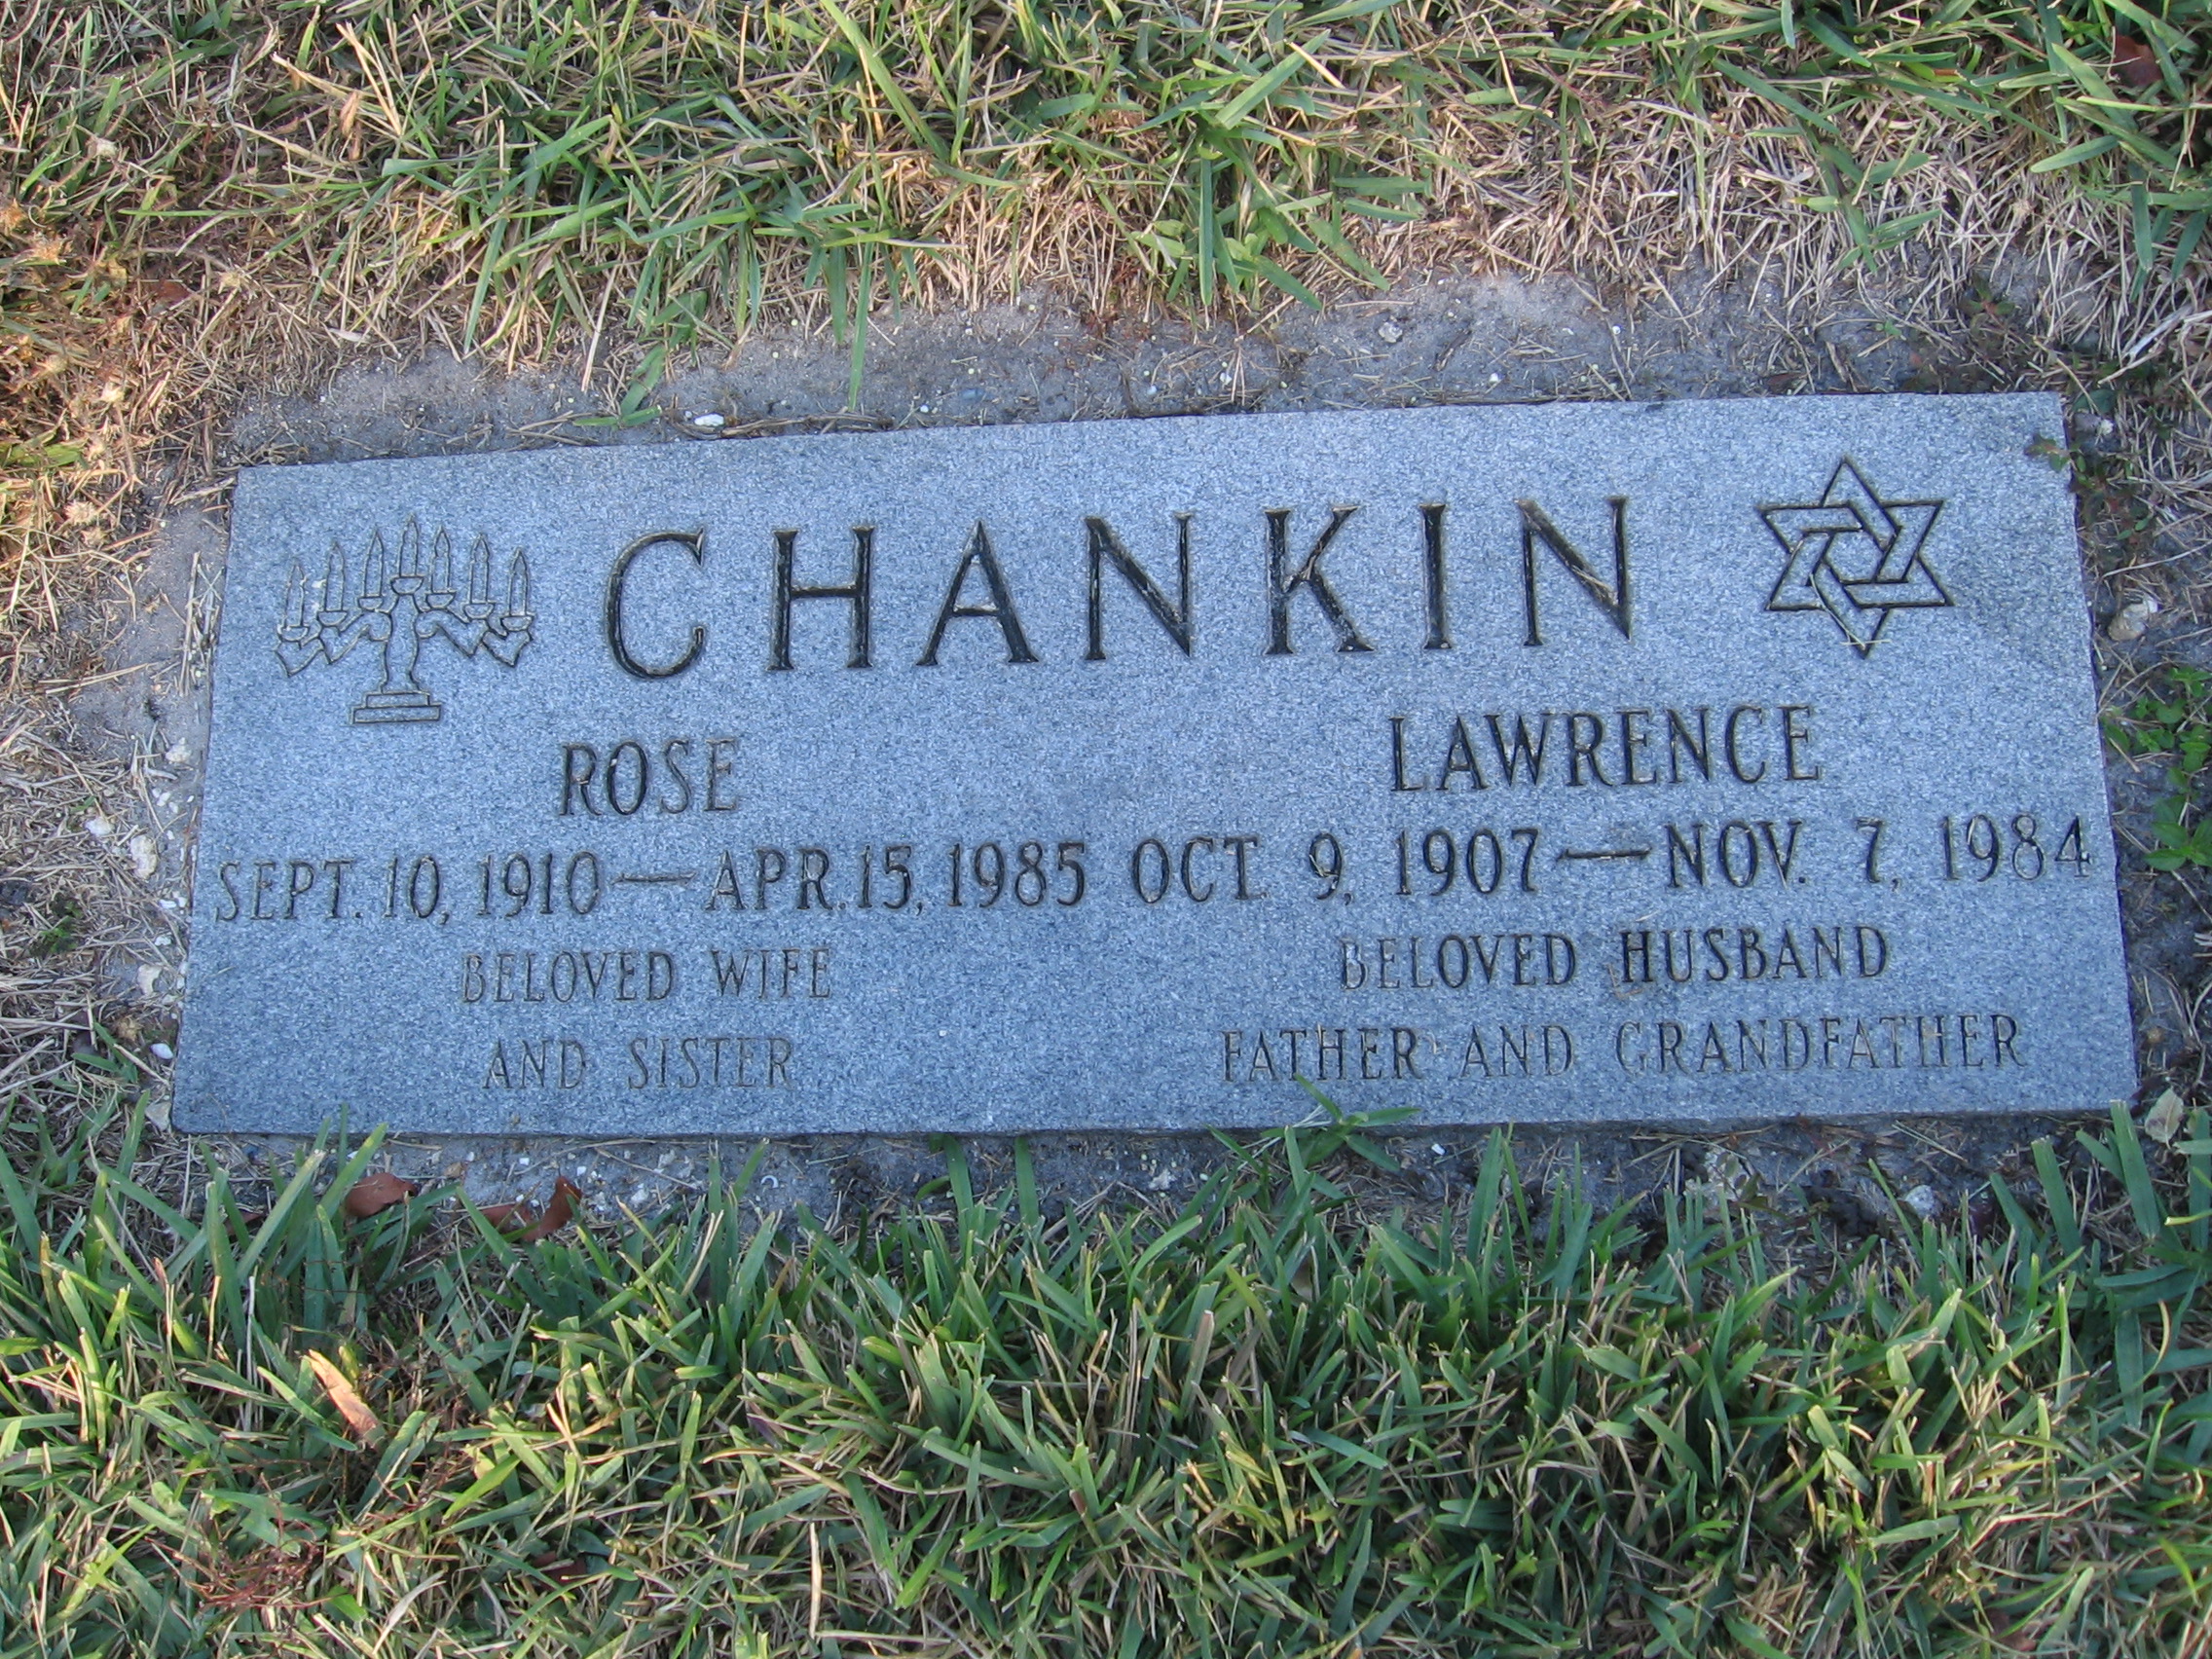 Rose Chankin